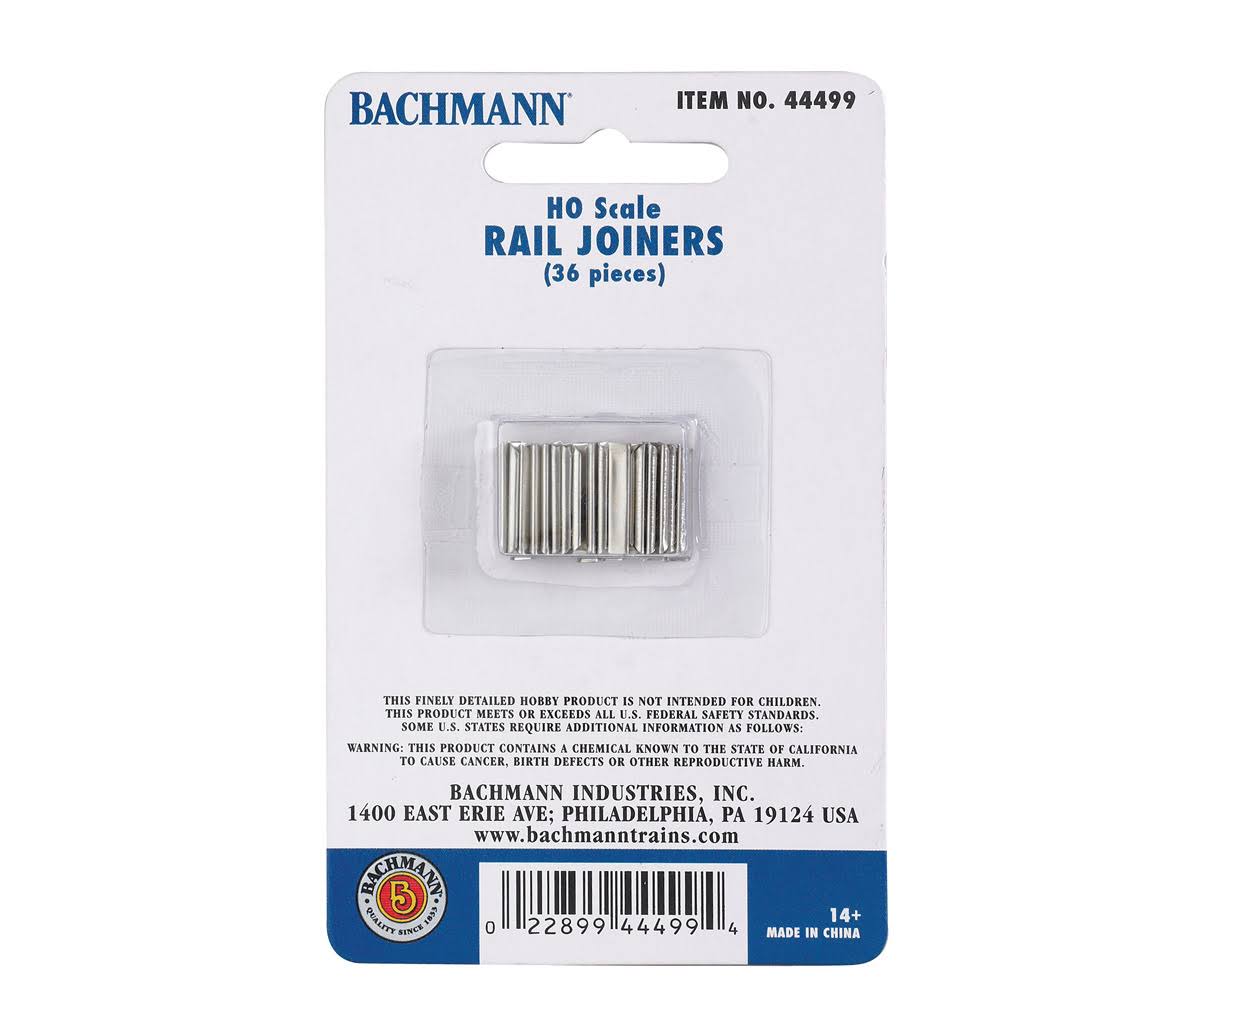 Bachmann Trains Ho Scale Rail Joiners - 36pcs